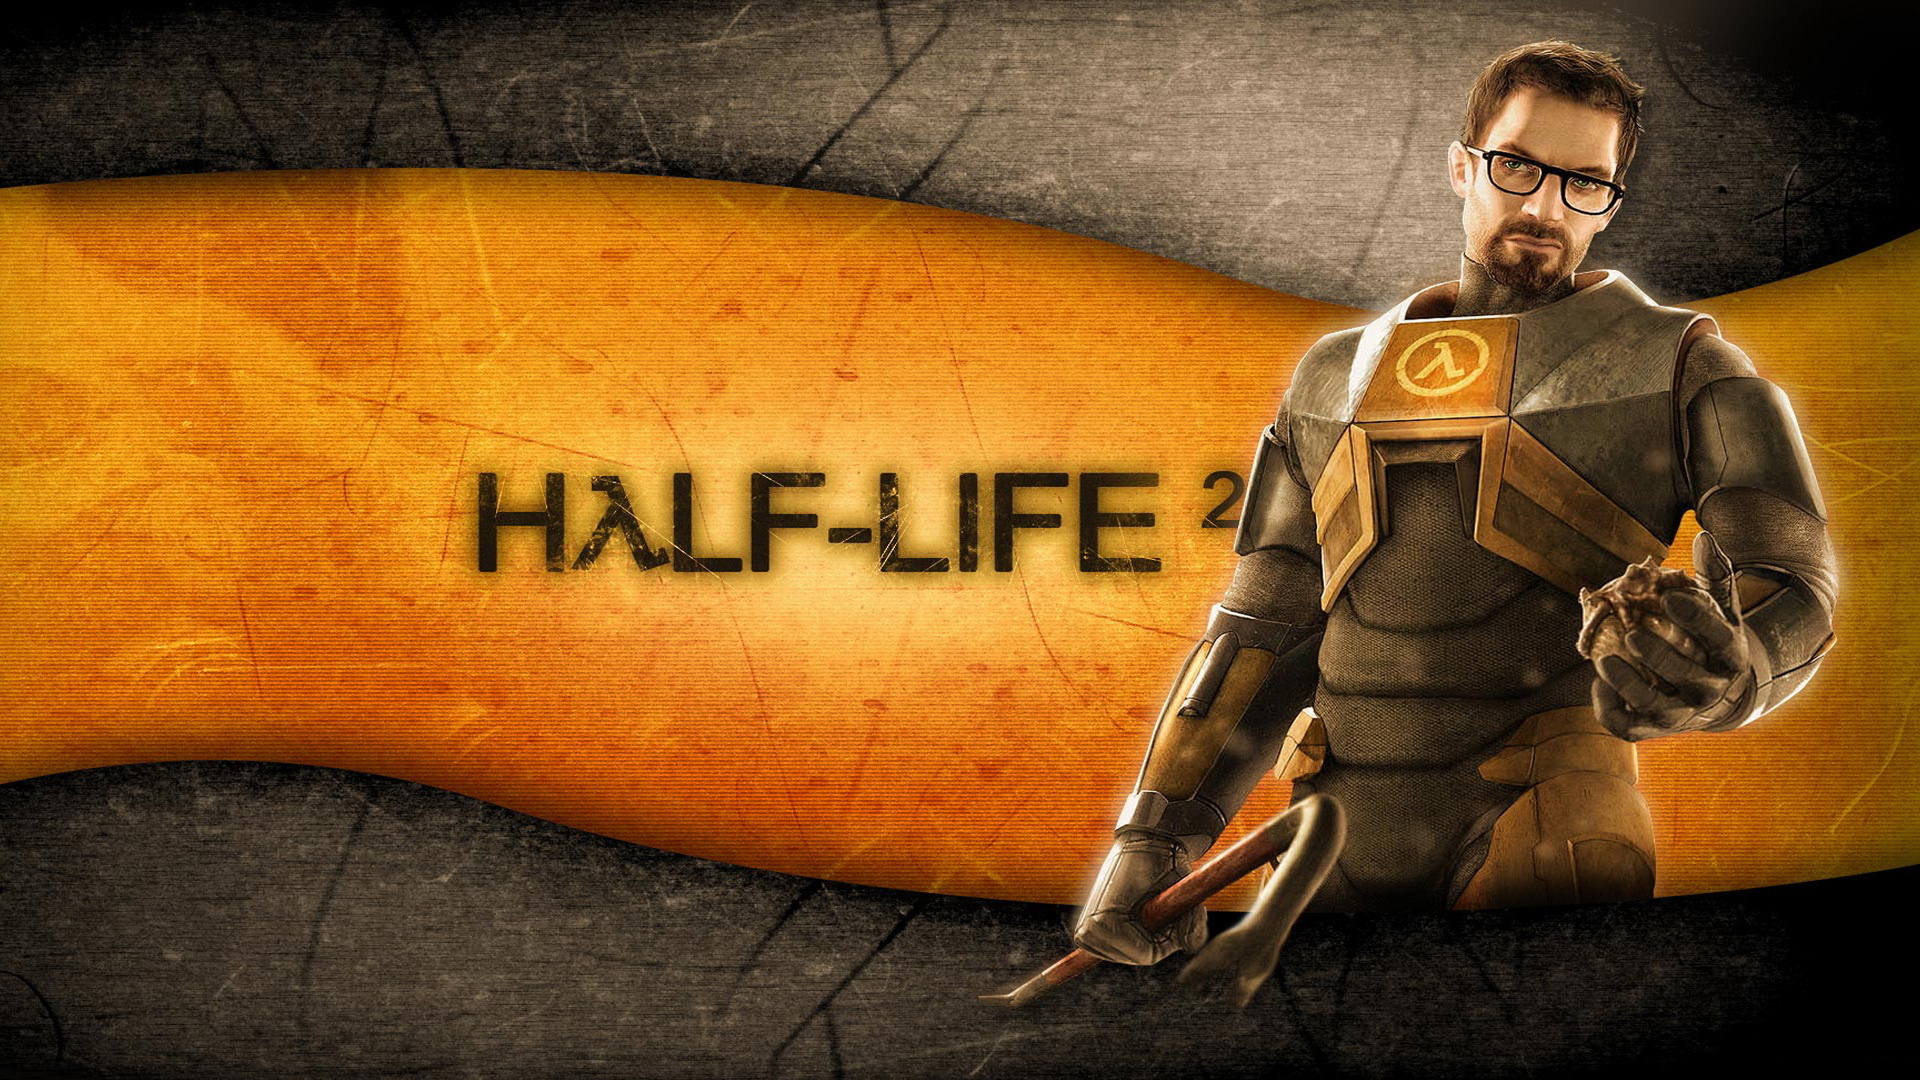 Half-Life 2 wallpaper, HD backgrounds, 1920x1080 Full HD Desktop